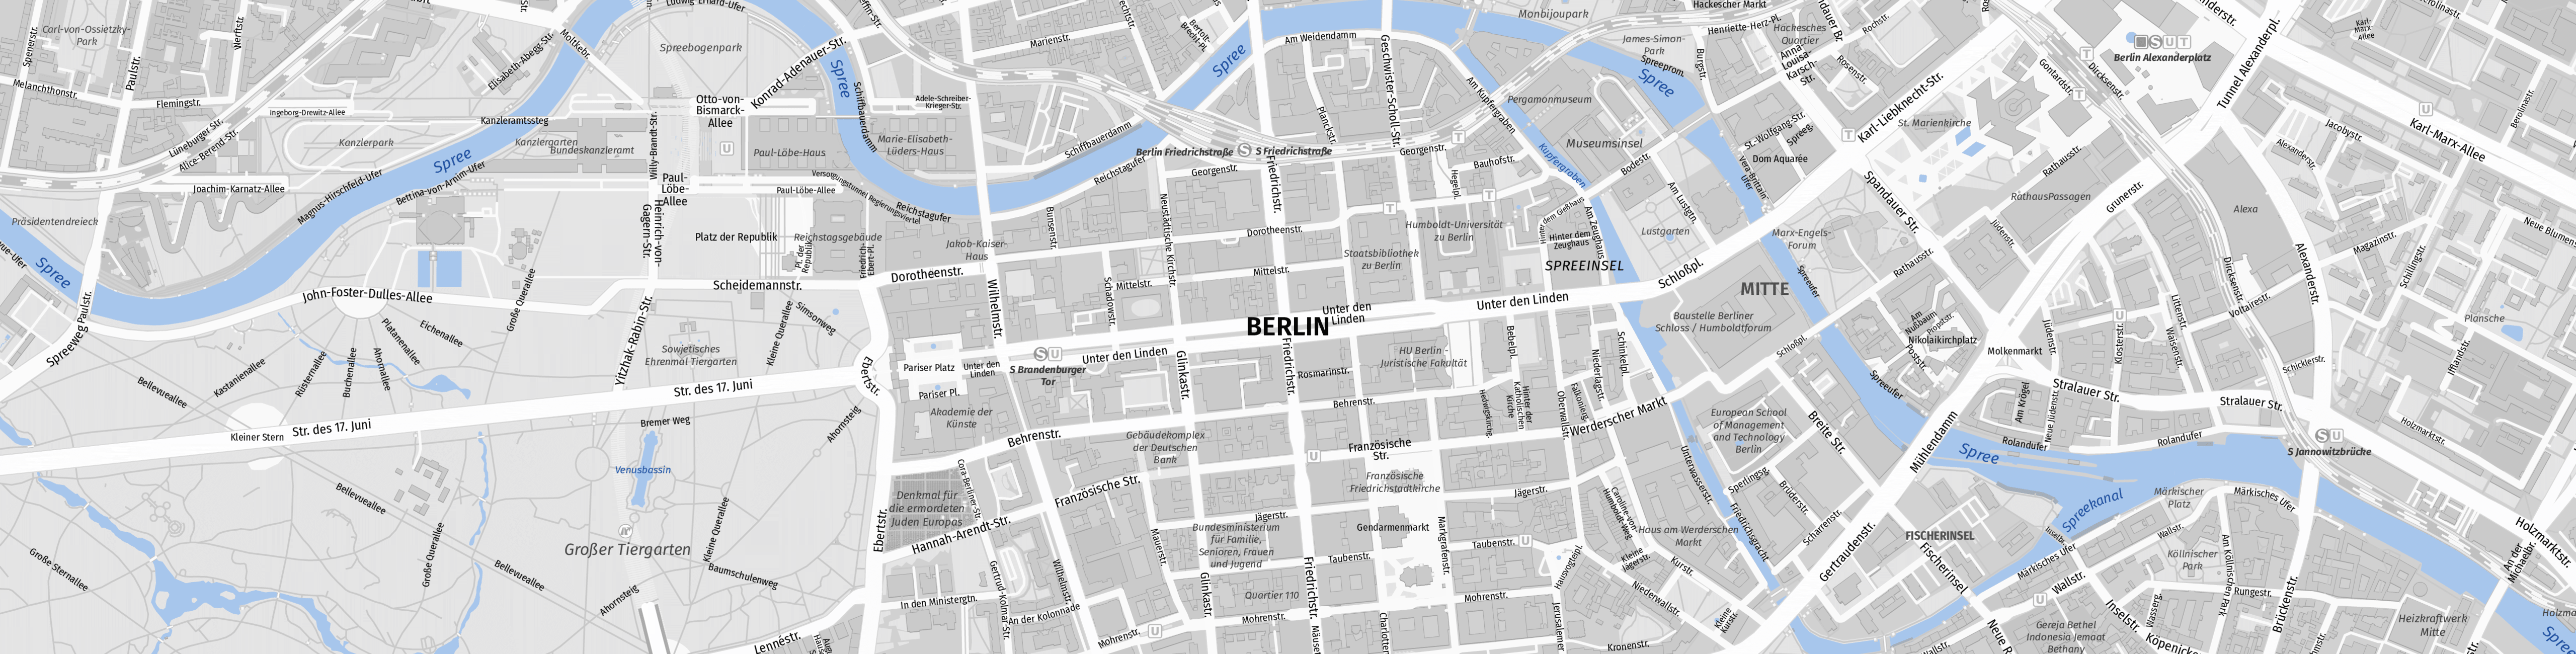 city map Berlin vector PDF download